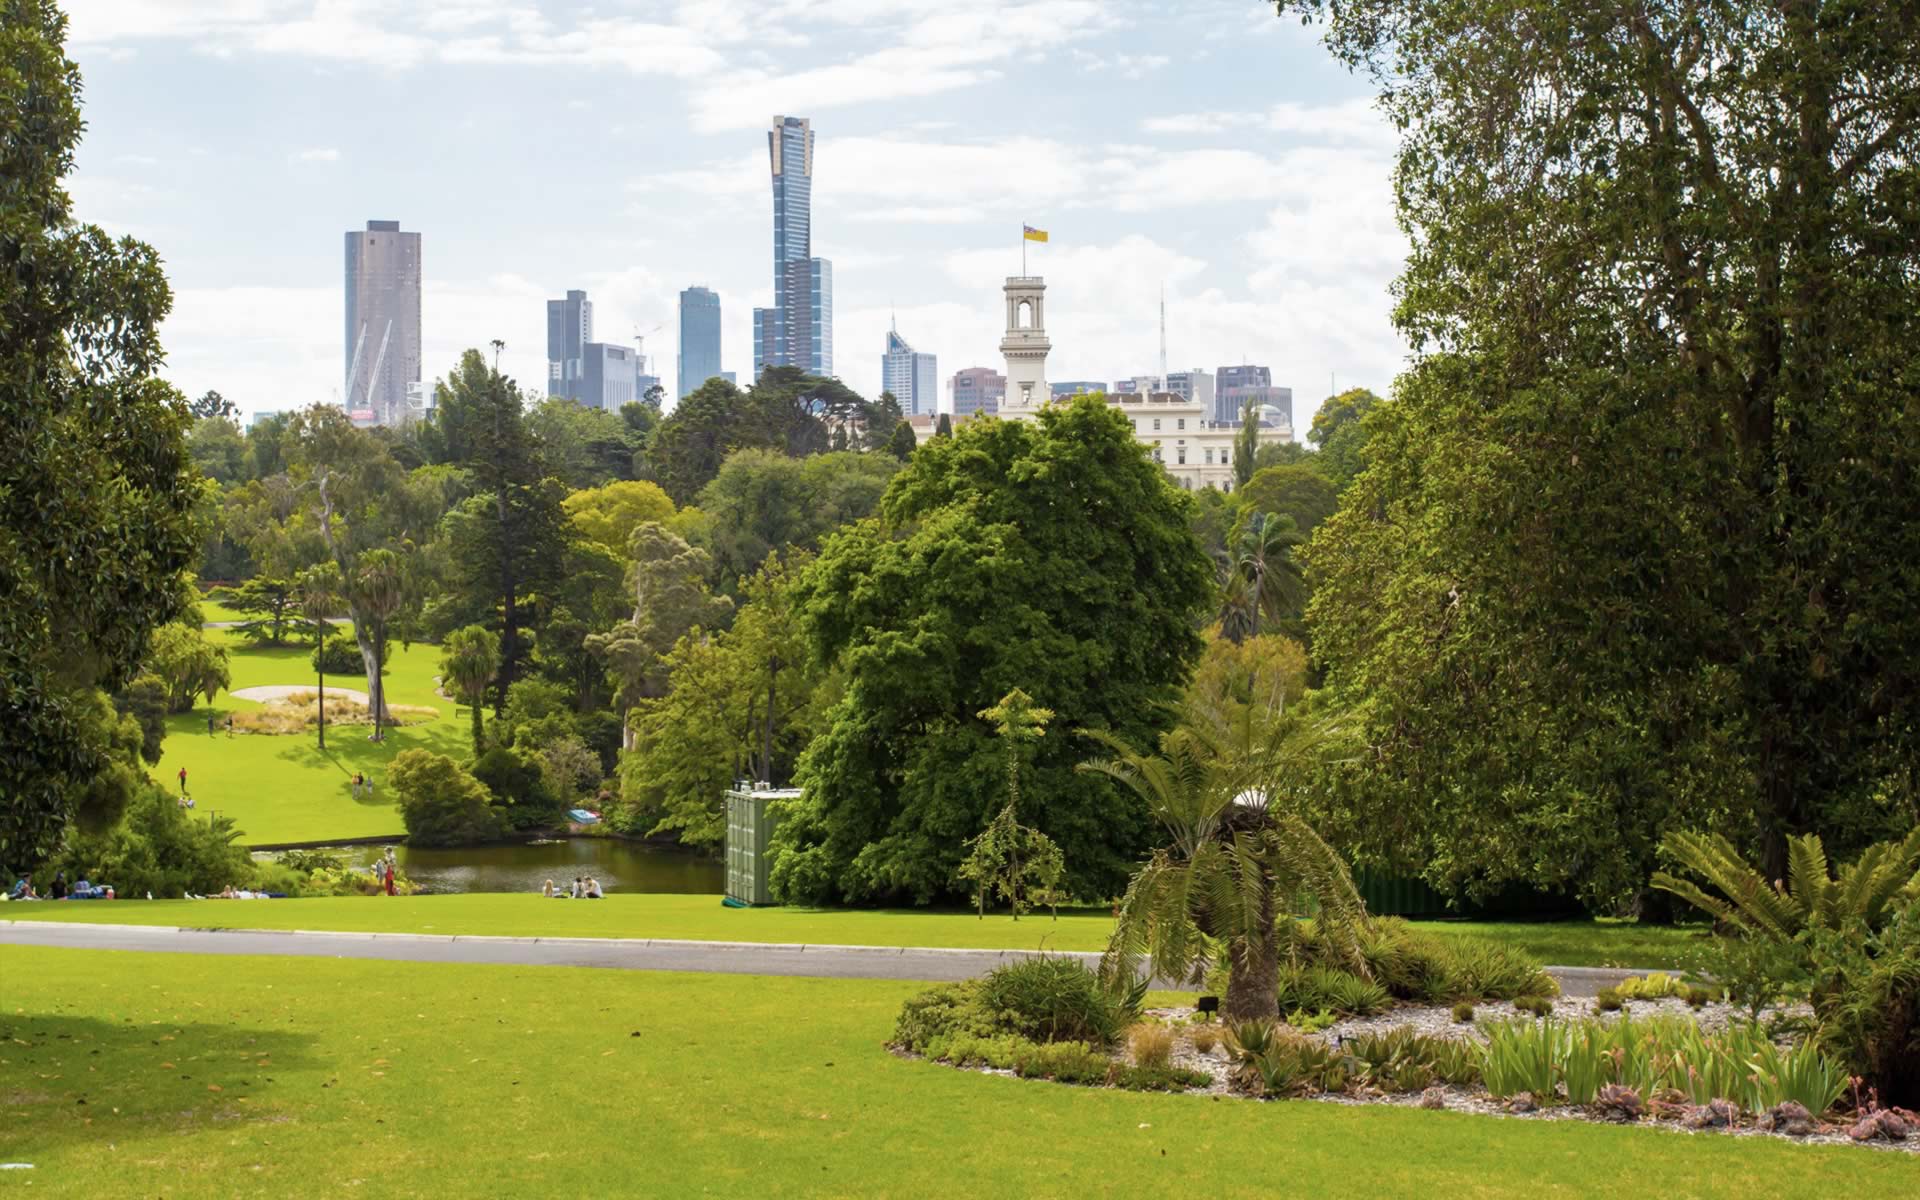 Royal Botanic Gardens and National Herbarium of Victoria